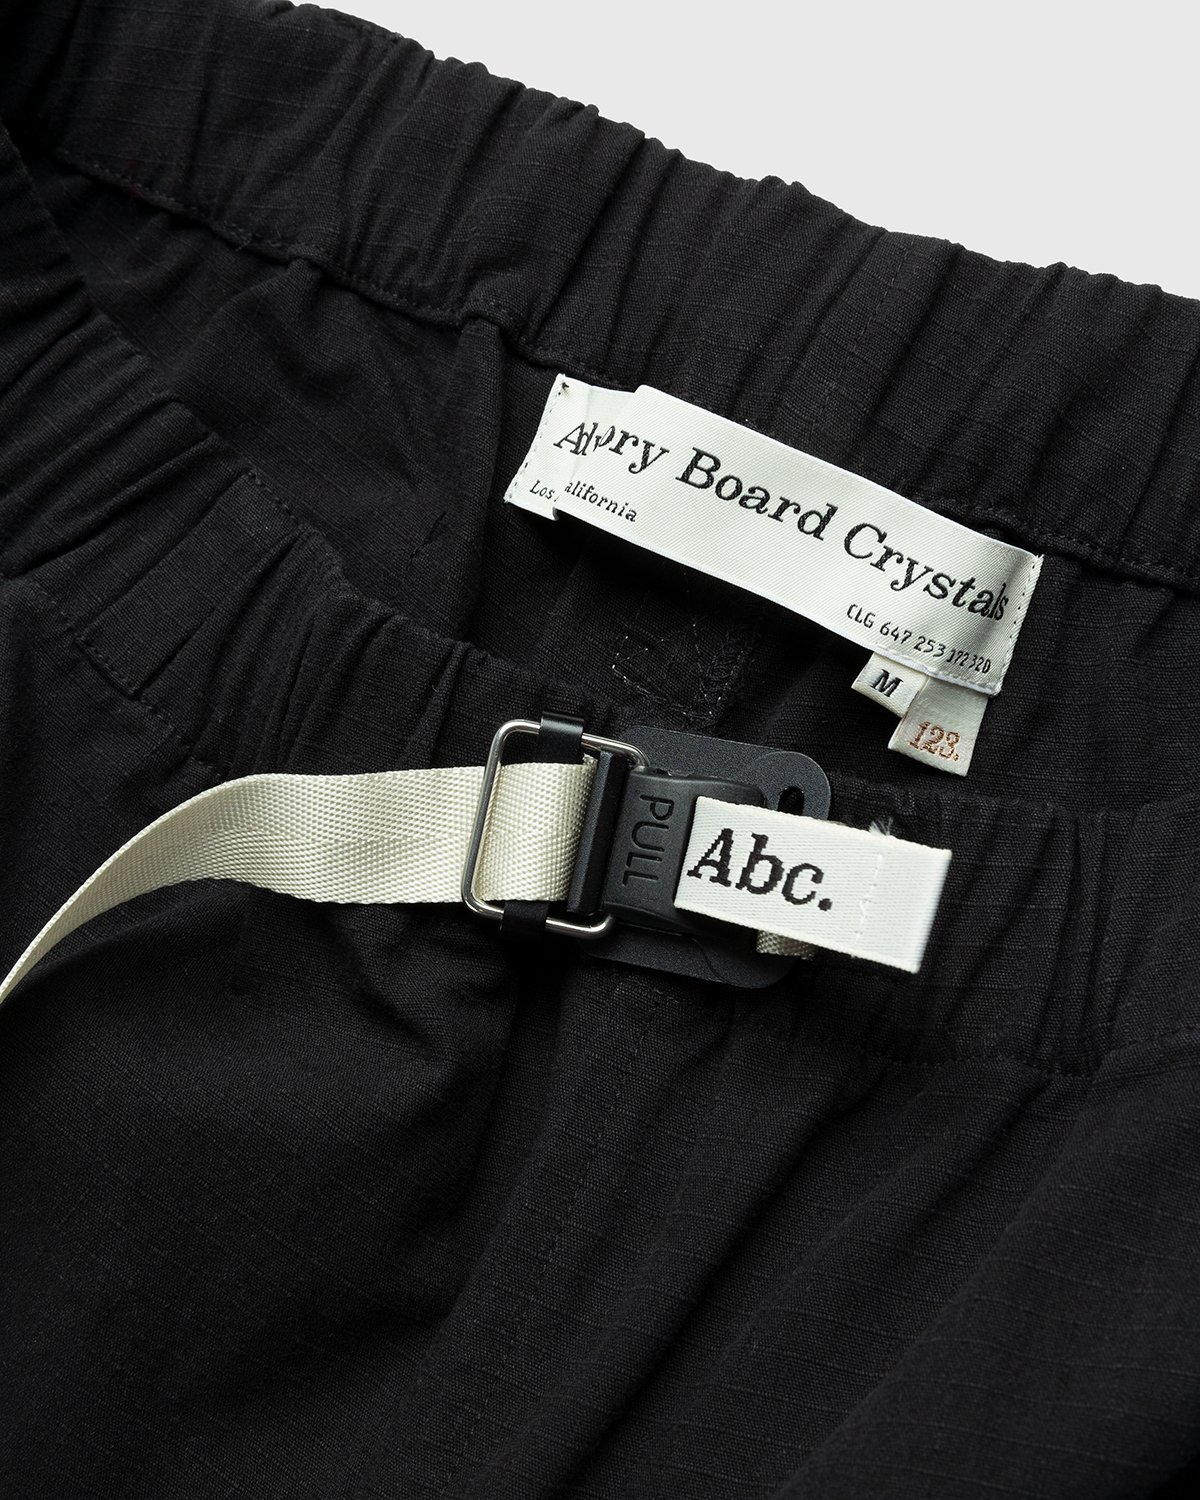 Abc. - Studio Work Pant Anthracite - Clothing - Black - Image 6